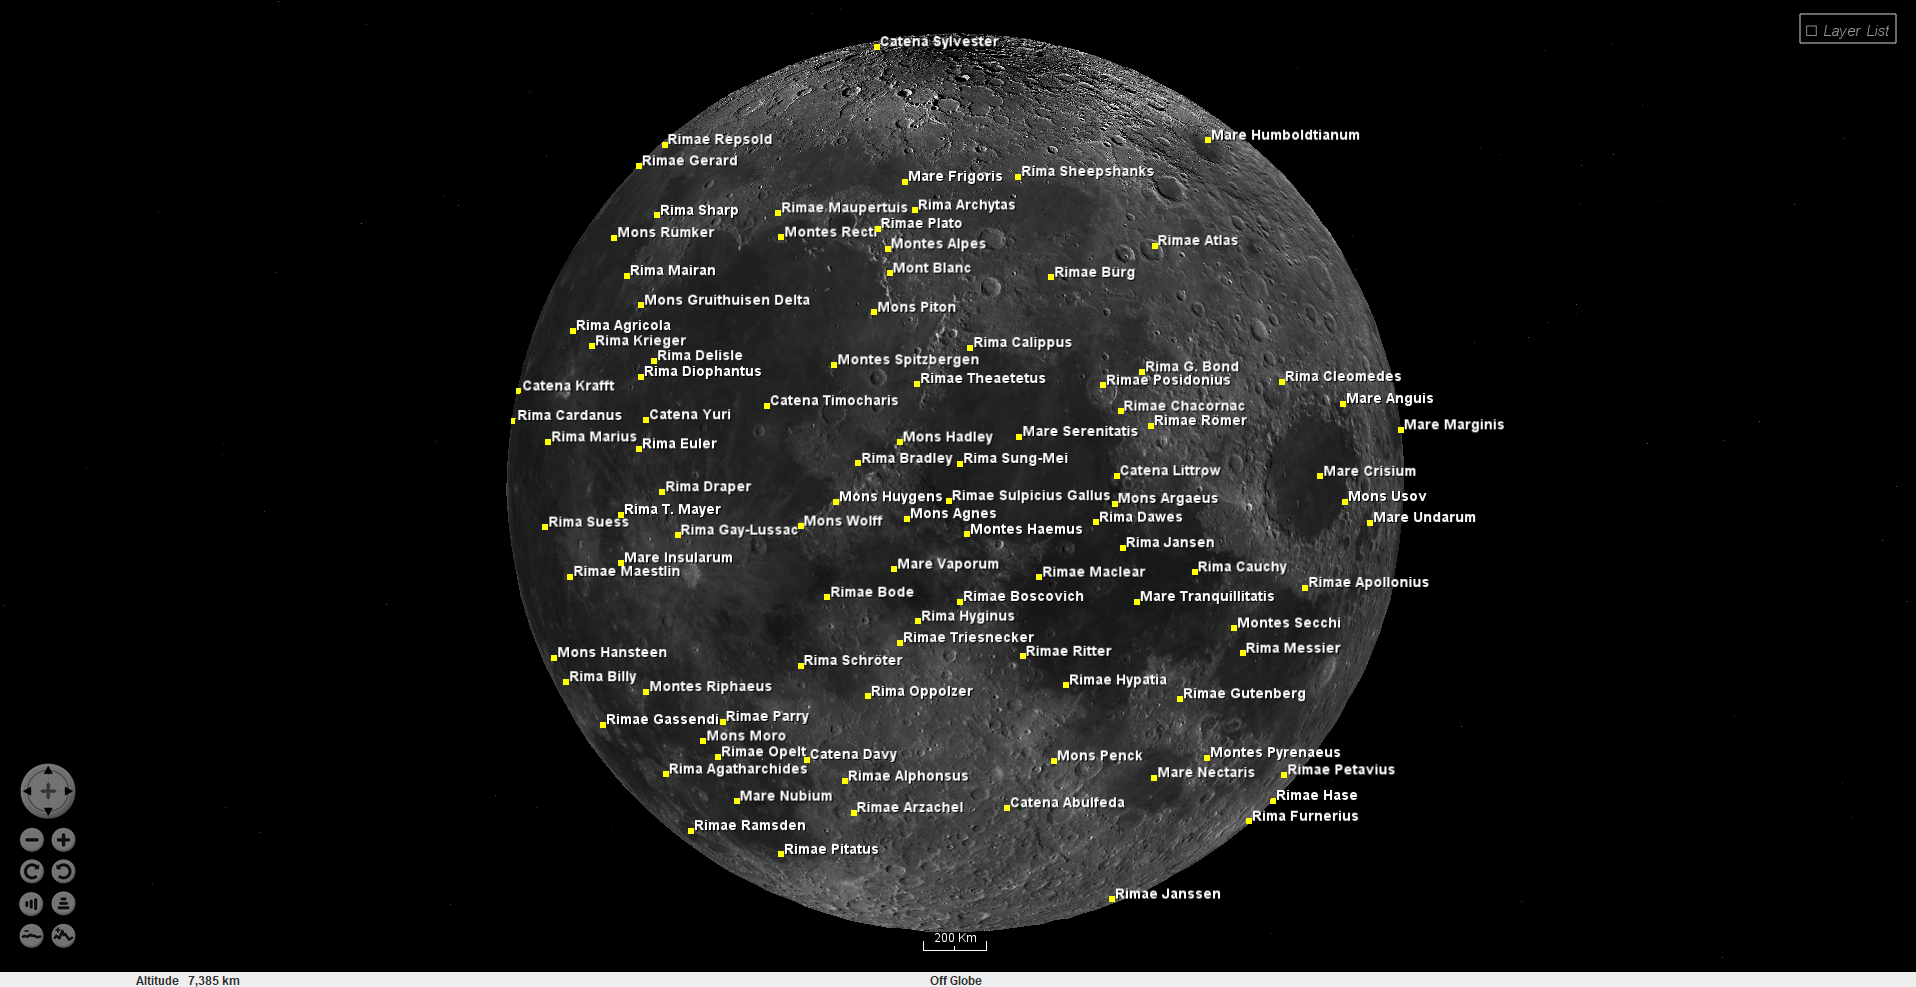 USGS Lunar Placemarks